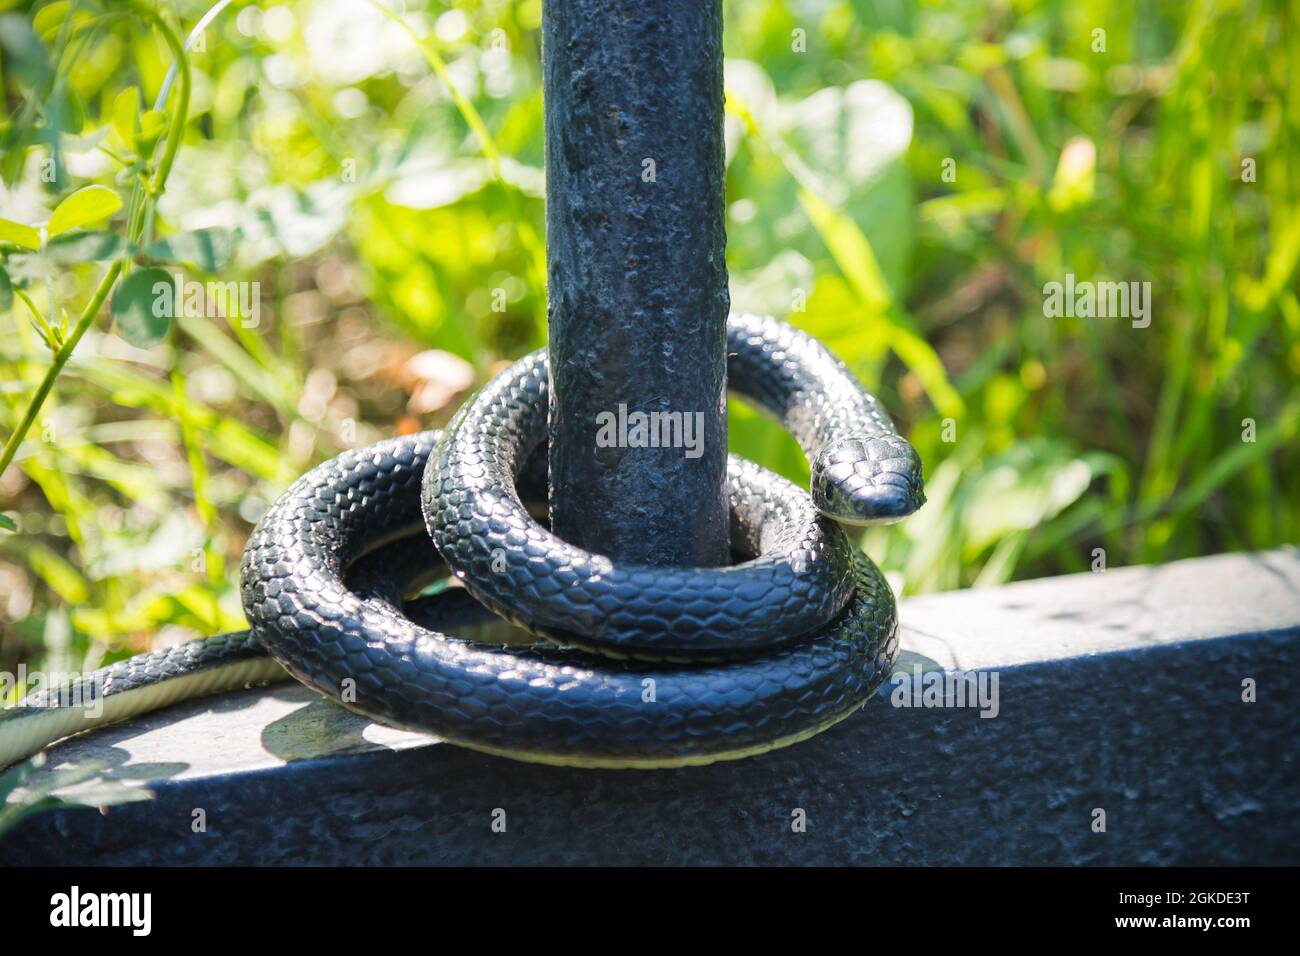 https://c8.alamy.com/comp/2GKDE3T/a-black-venomous-snake-on-a-sunny-day-in-park-wrapped-around-a-fence-2GKDE3T.jpg